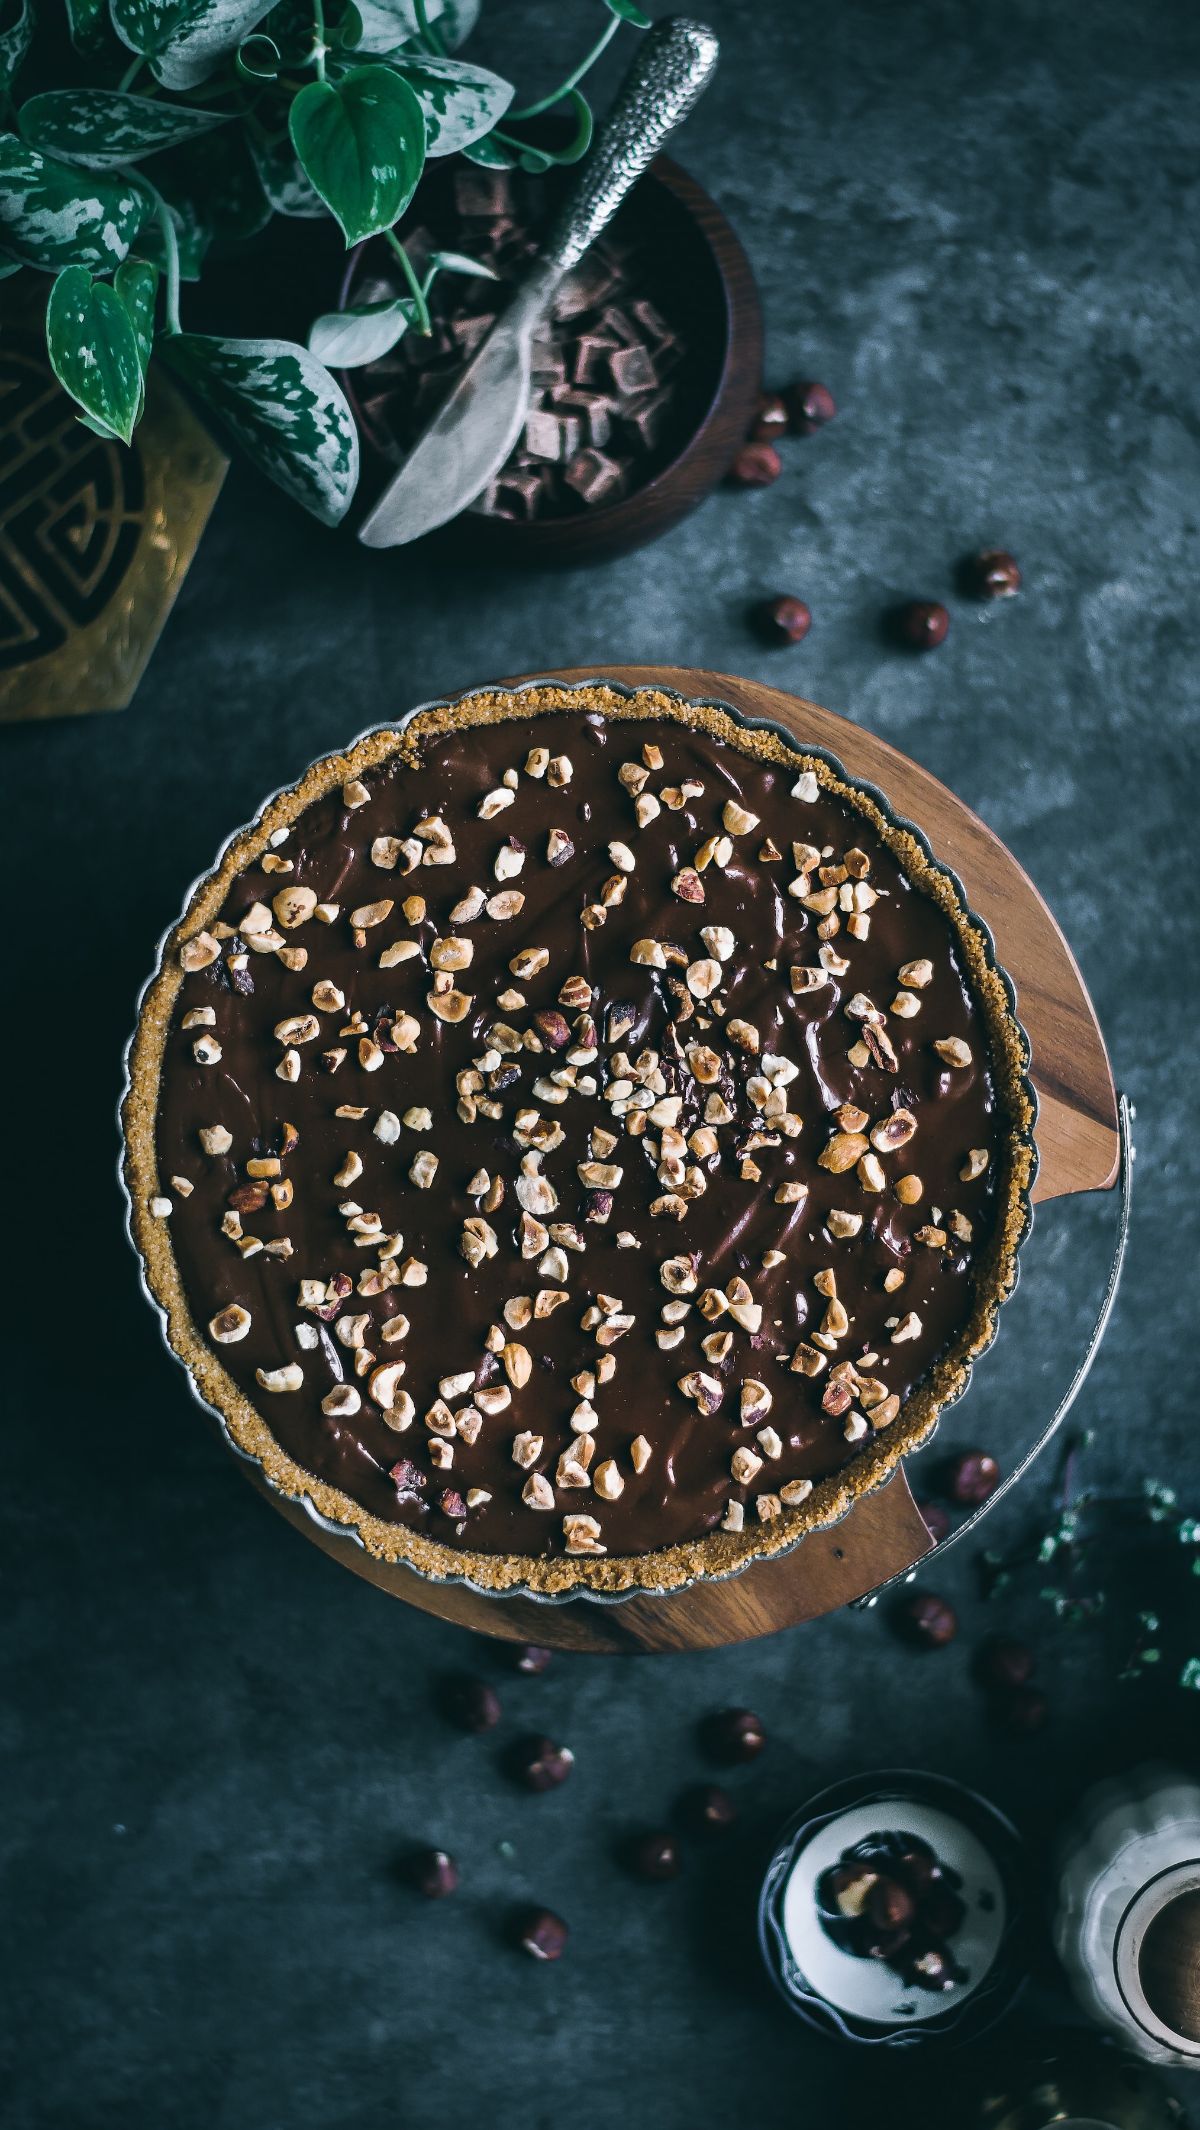 Peanut Butter Chocolate Pie Recipe